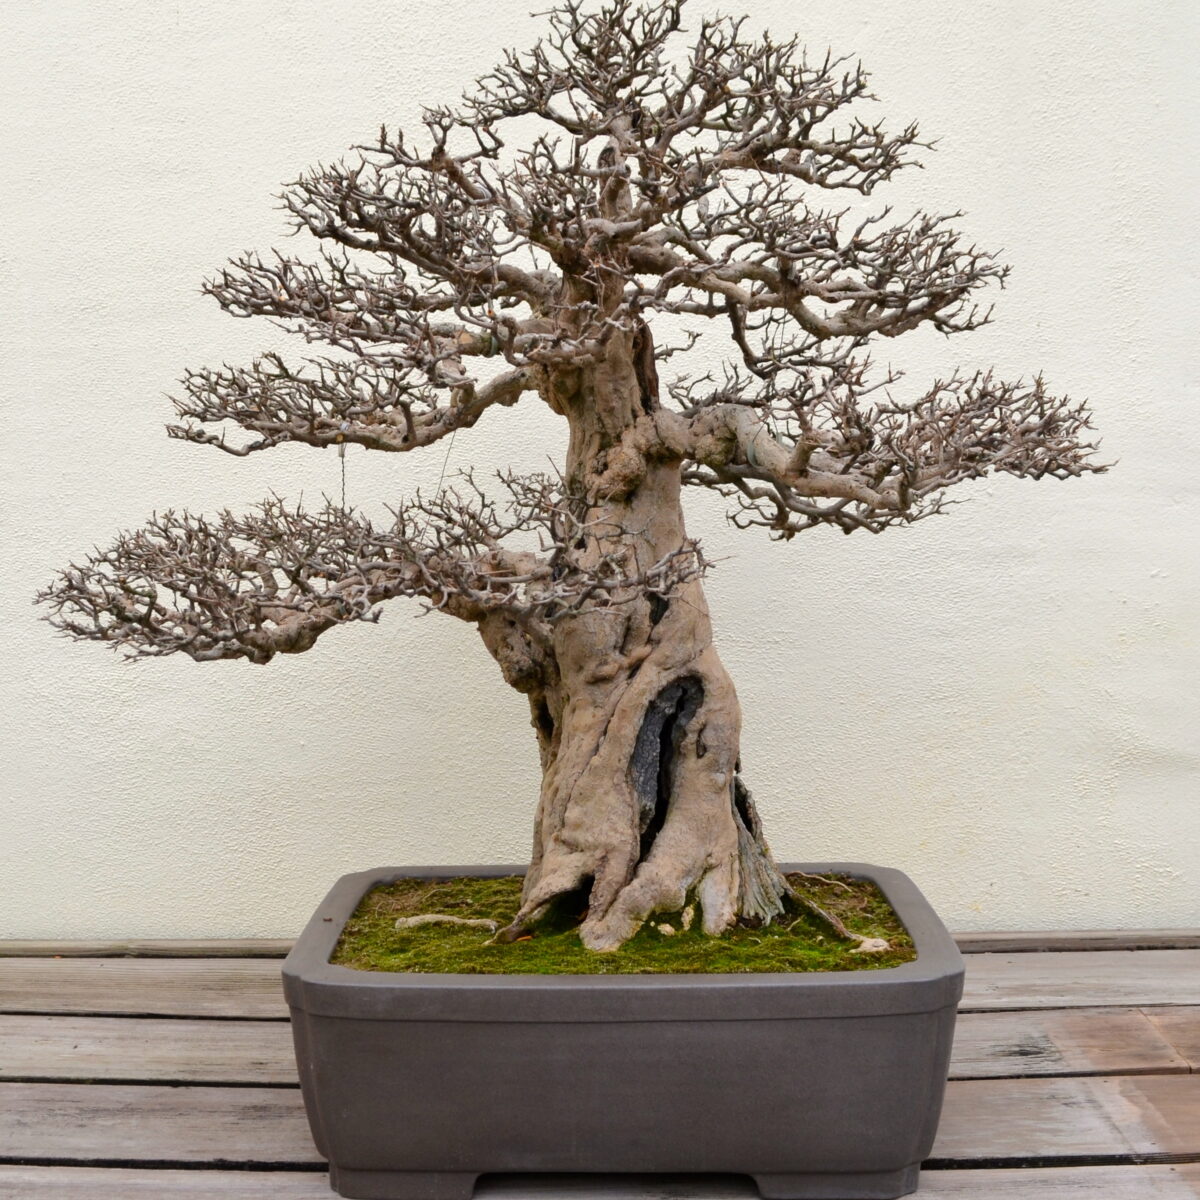 A 388-year-old bonsai tree